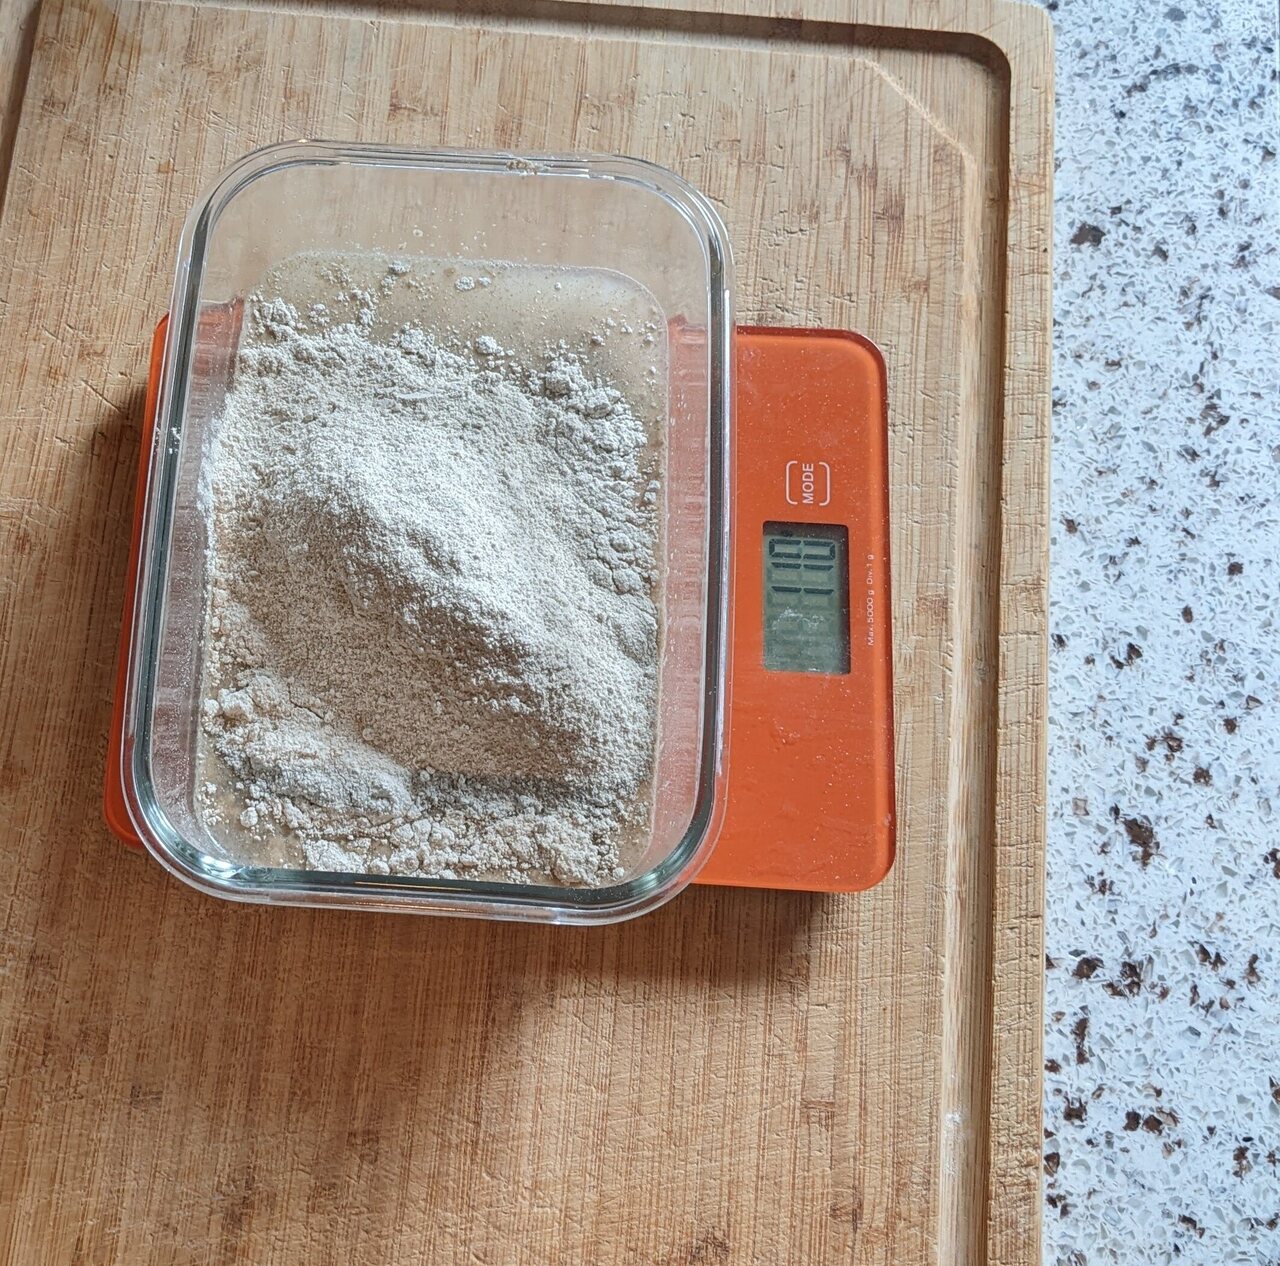 Add rye flour. Mix very well